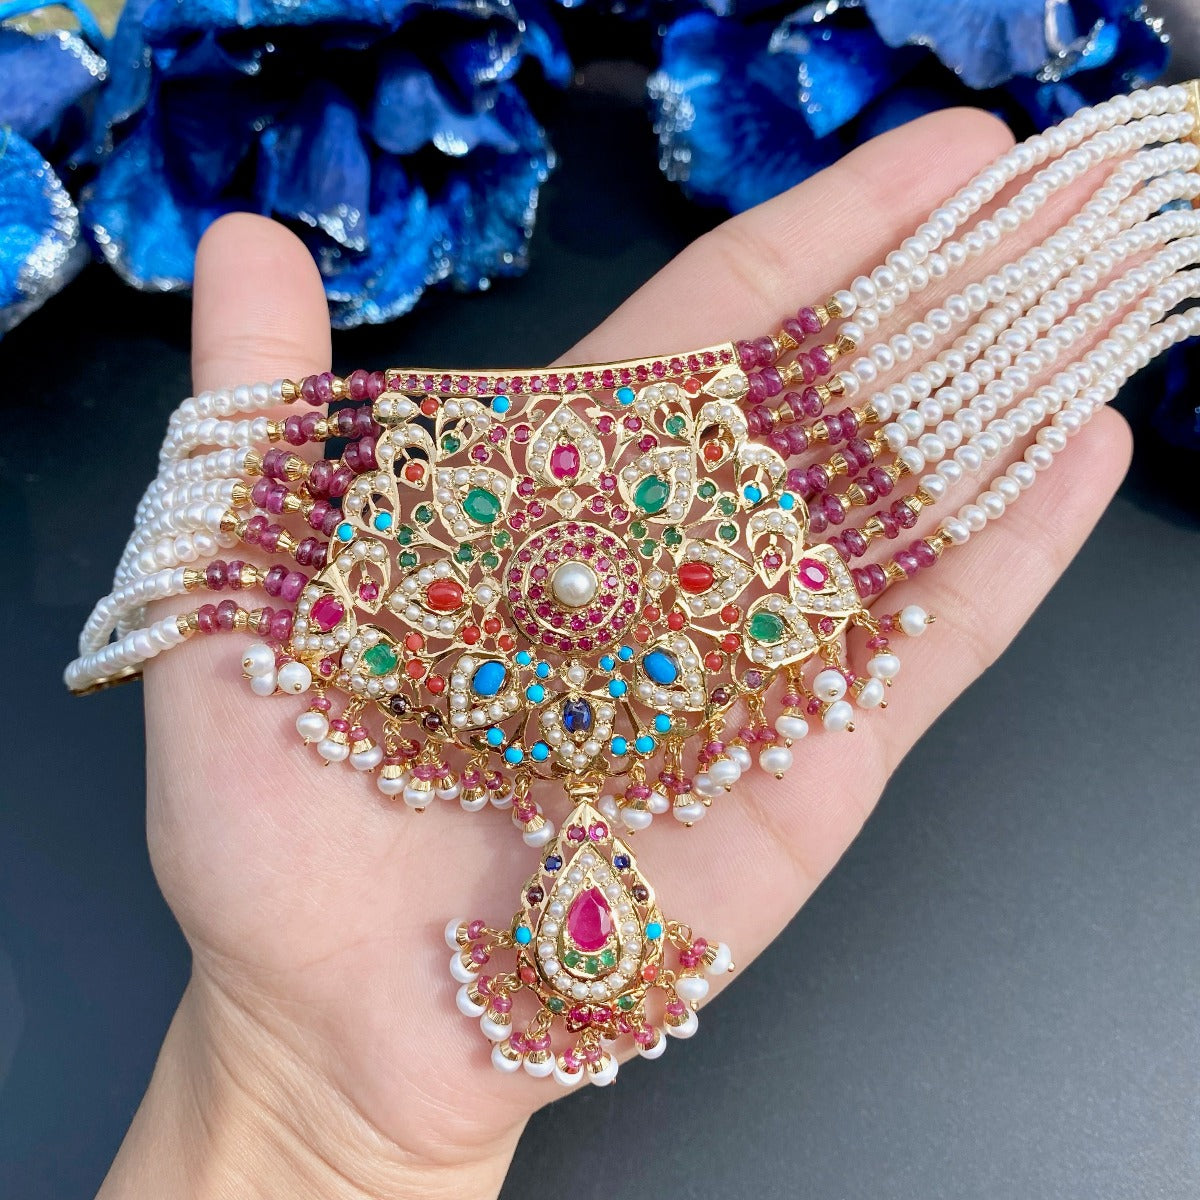 rajputana navratna choker necklace with pearls for lehenga